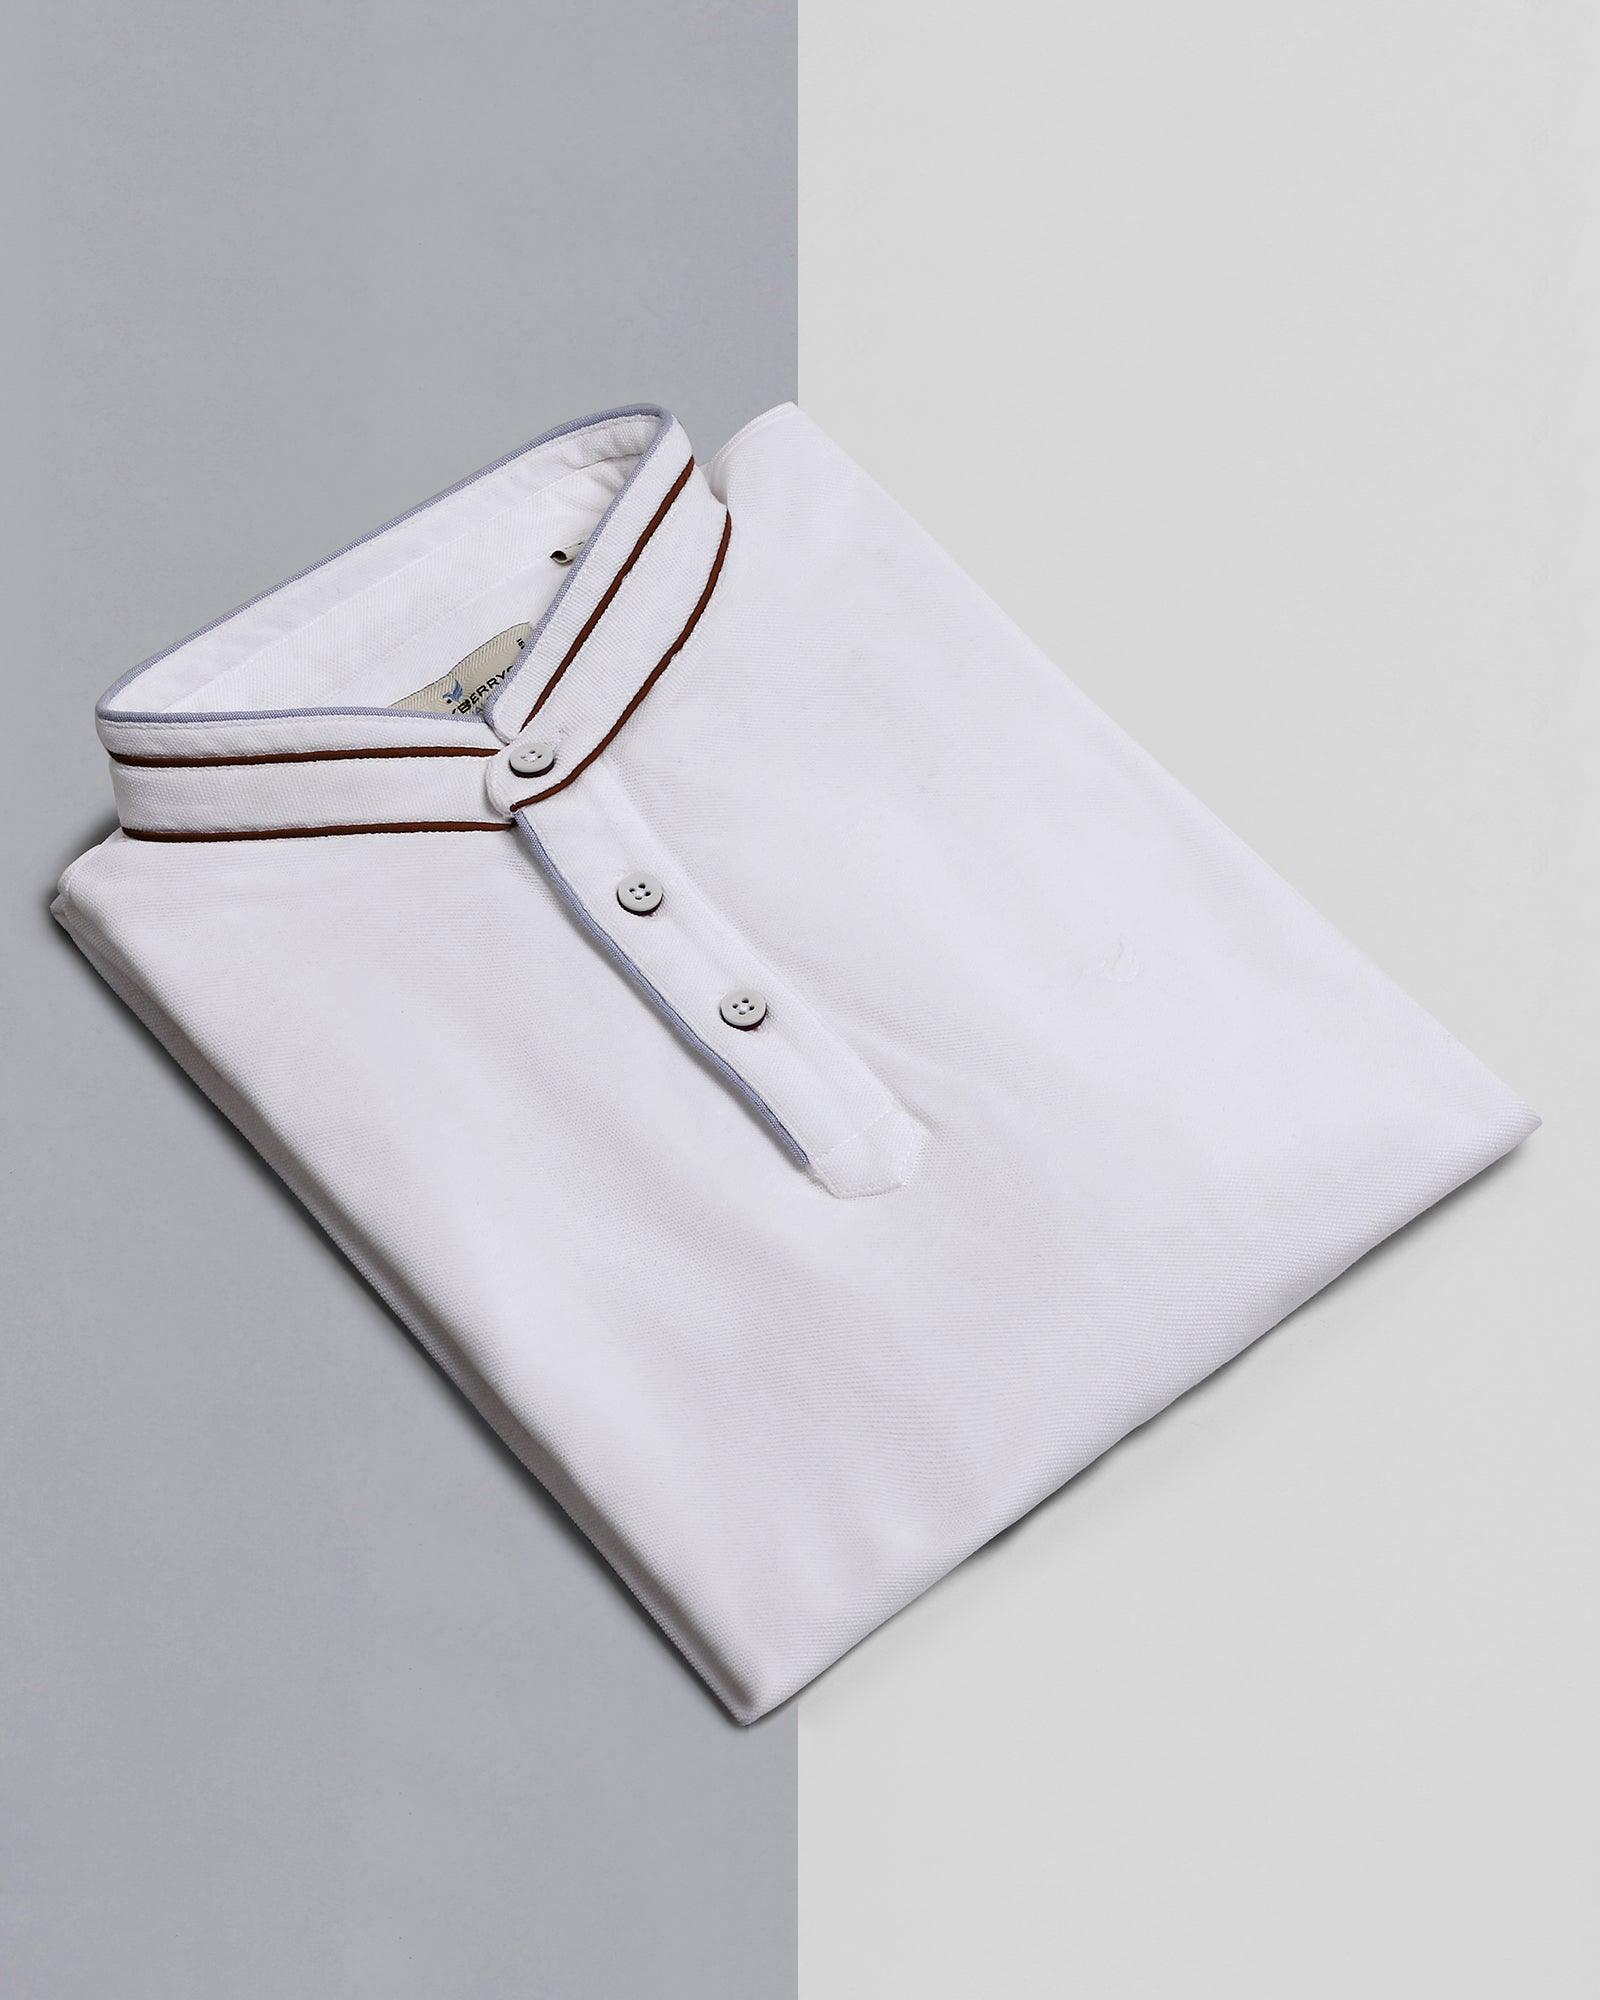 Mandarin Collar White Solid T Shirt - Thomas